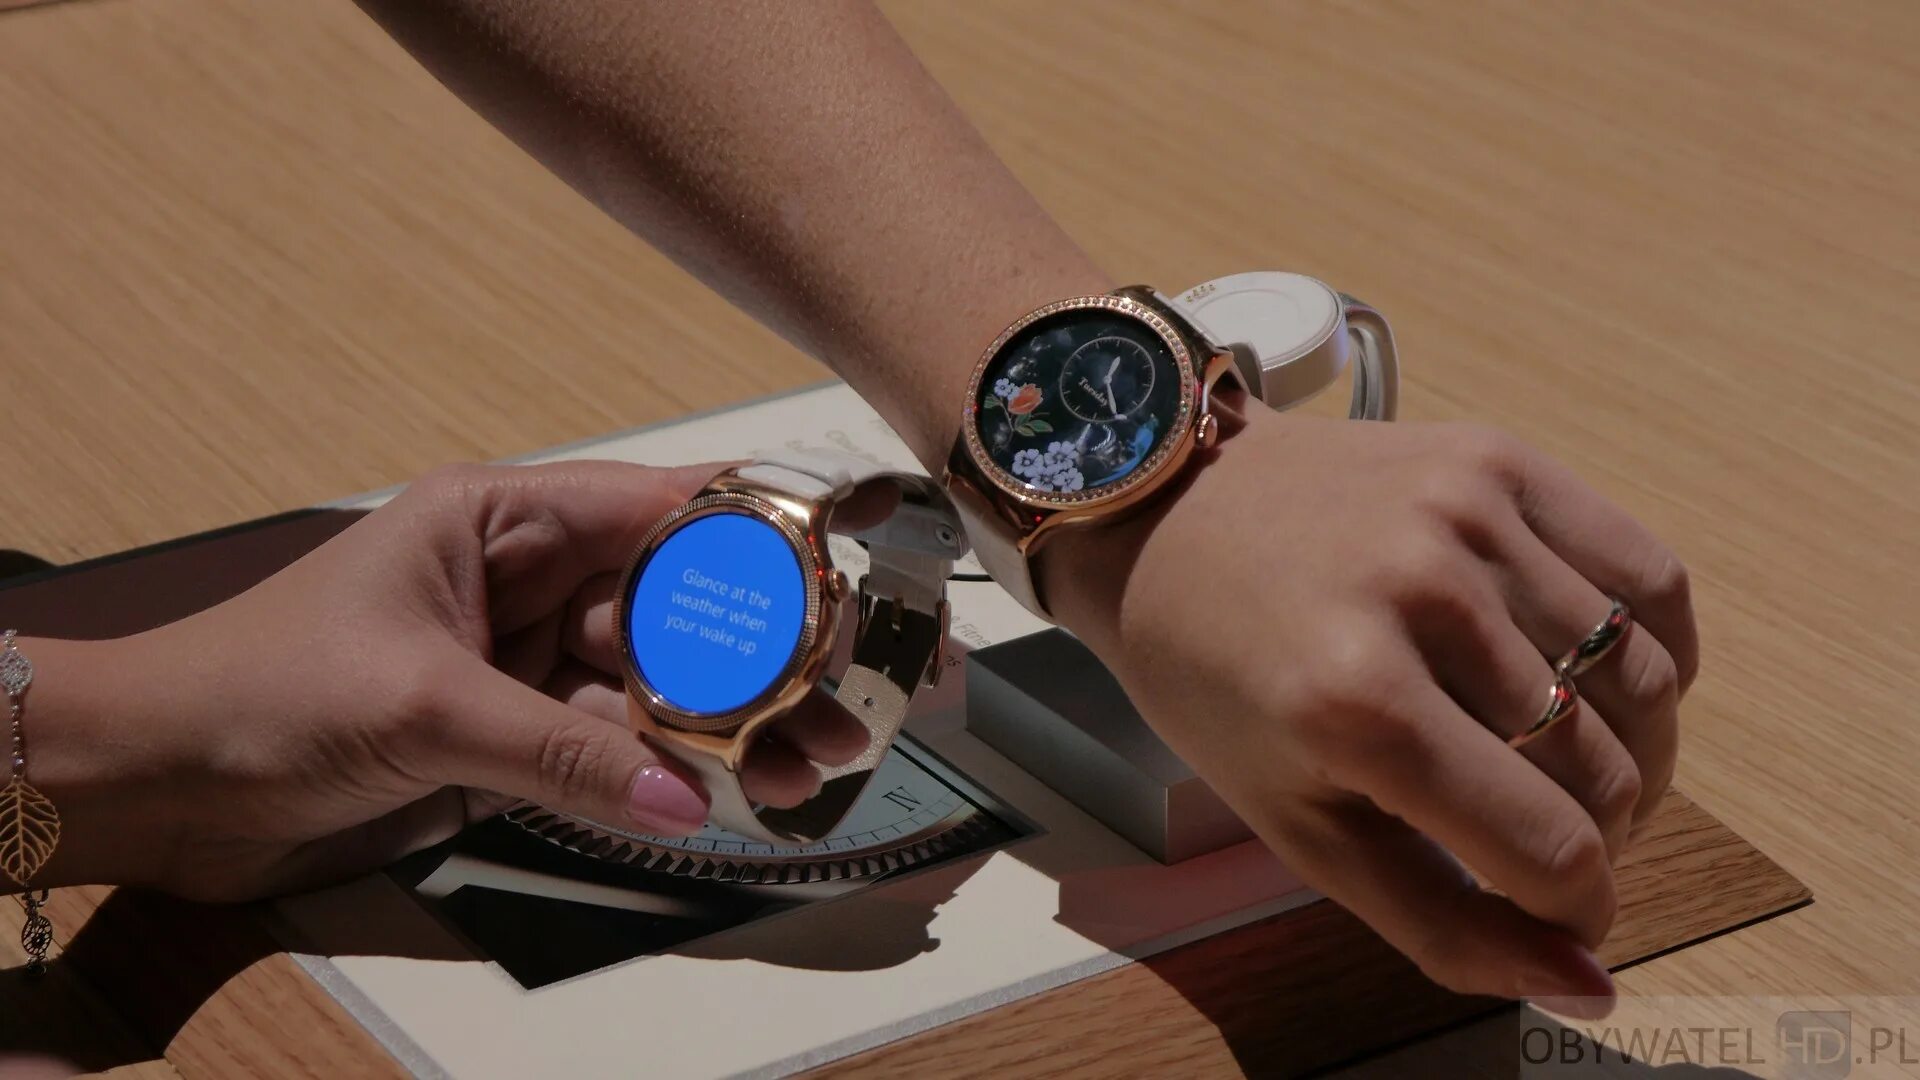 Huawei watch fit тренировки. Huawei watch Elegant. Huawei watch Jewel. Смарт часы Хуавей Элегант. Huawei watch Fit белый.